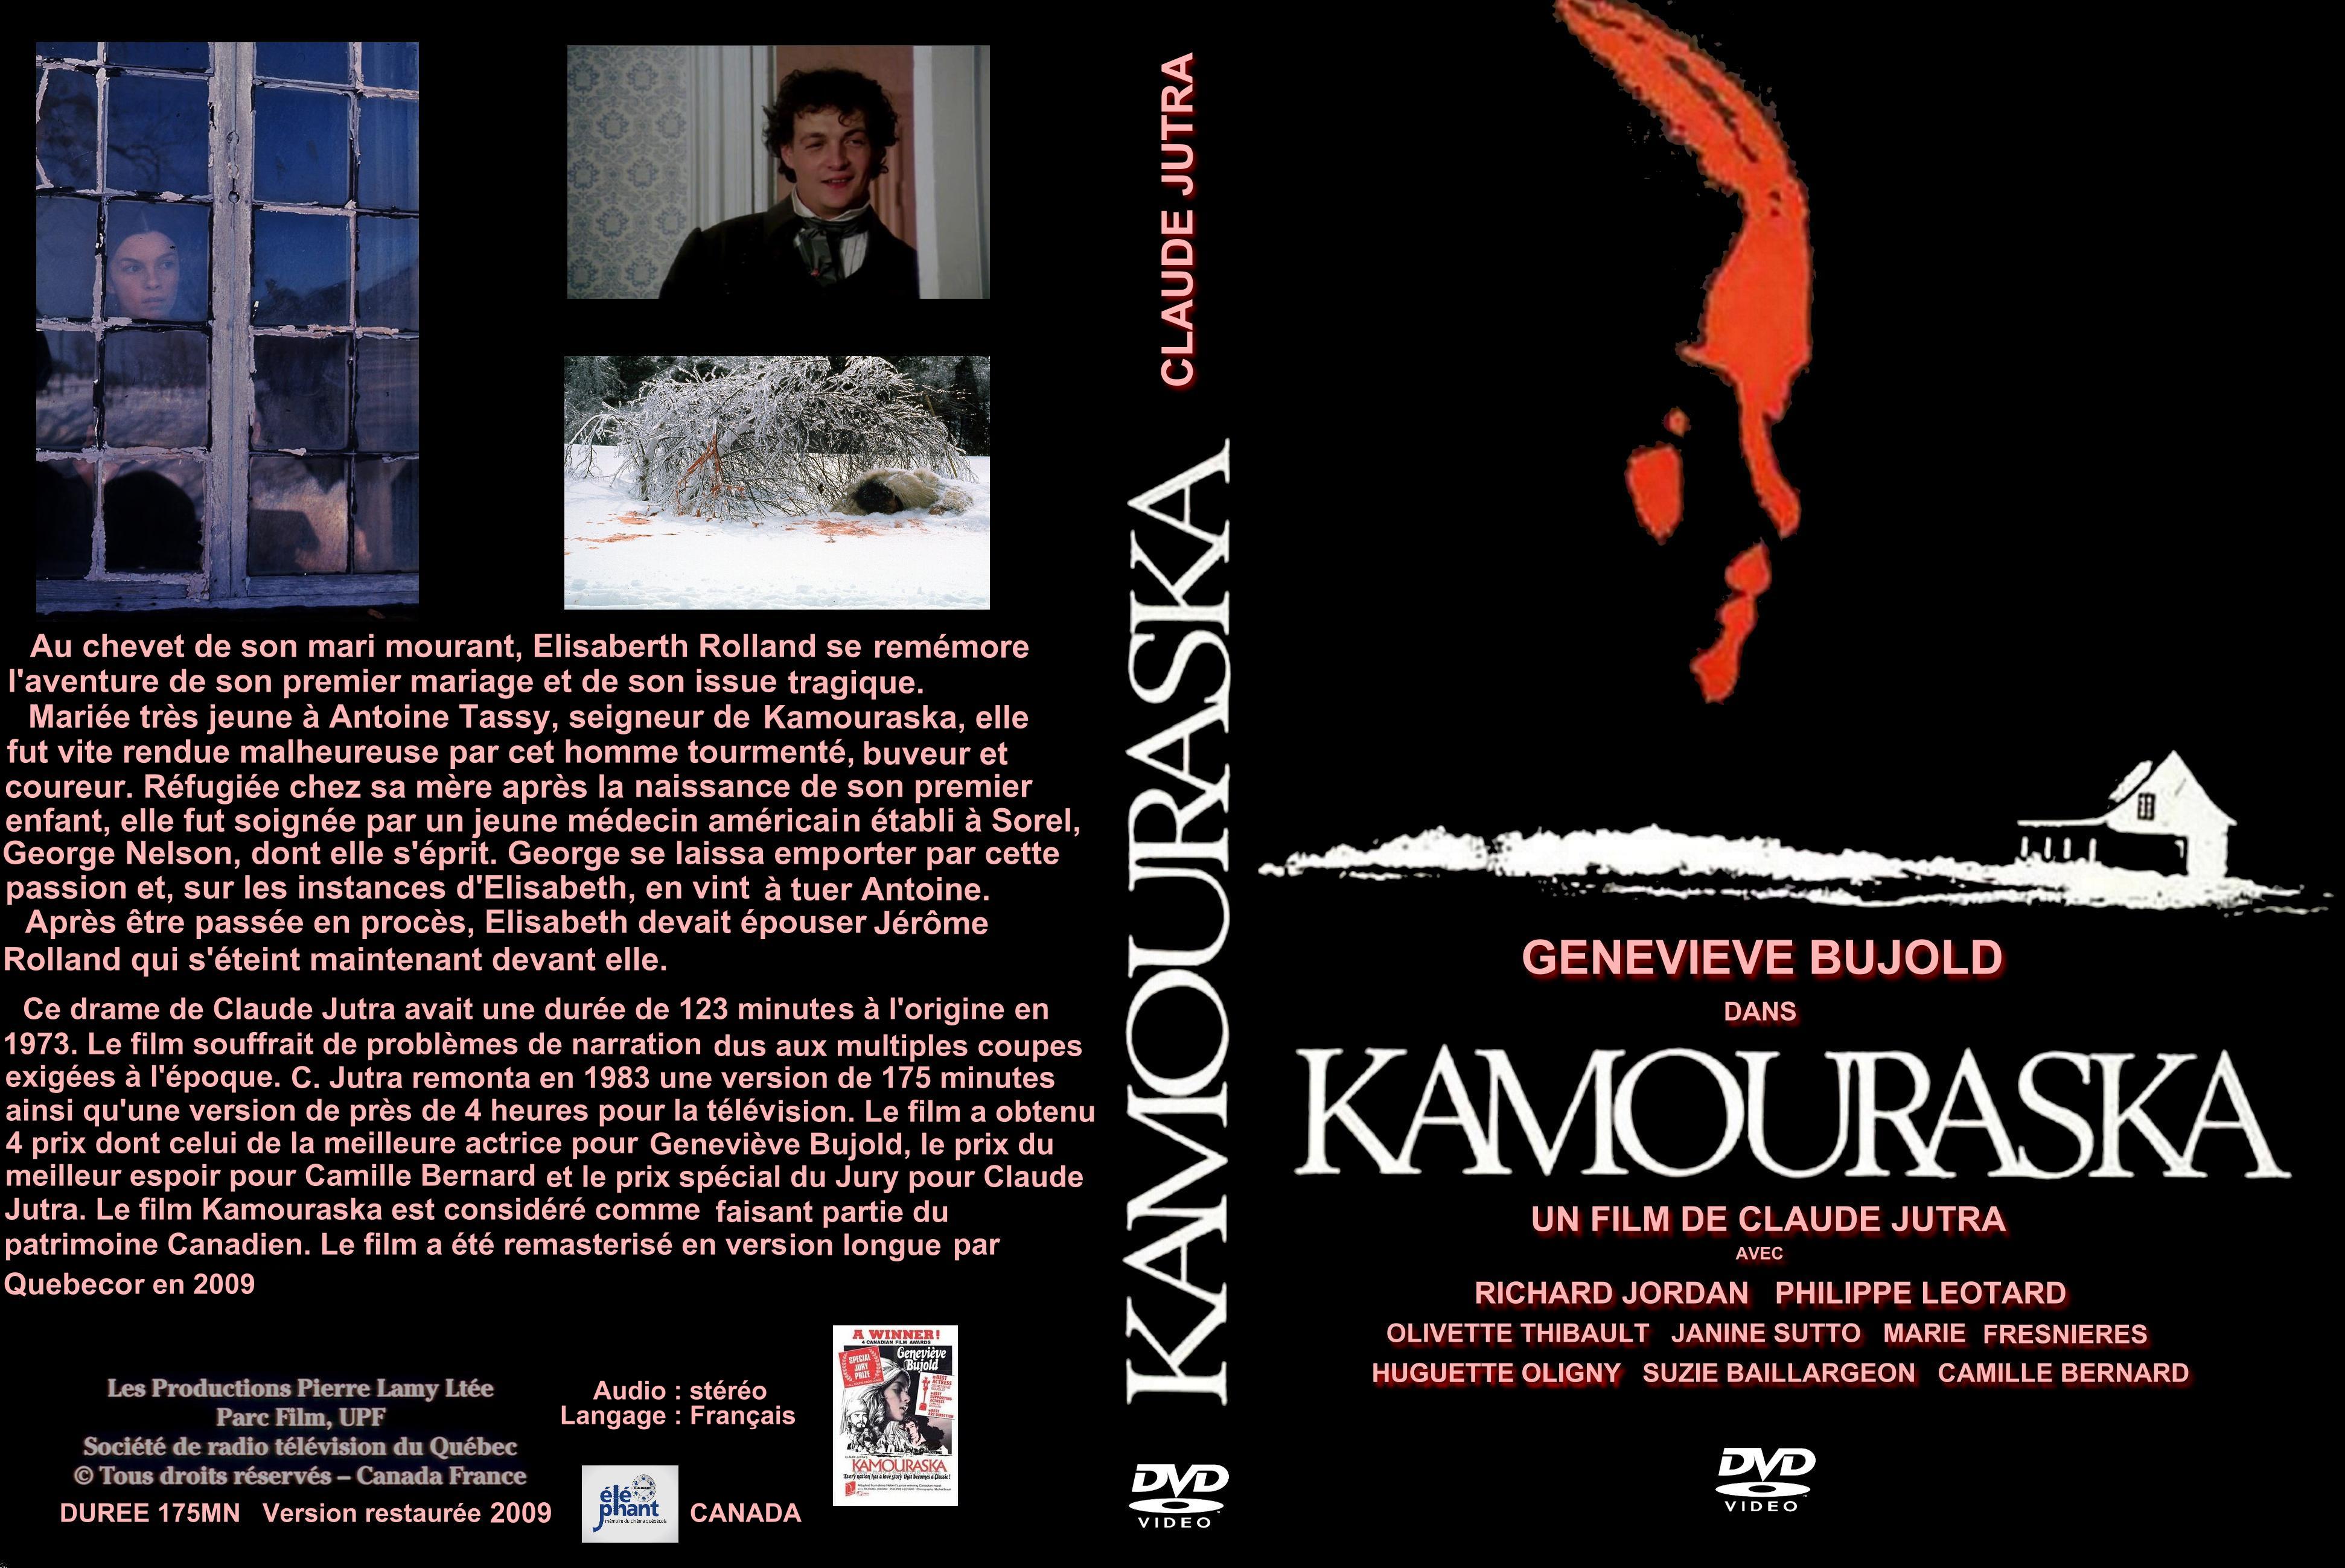 Jaquette DVD Kamouraska custom